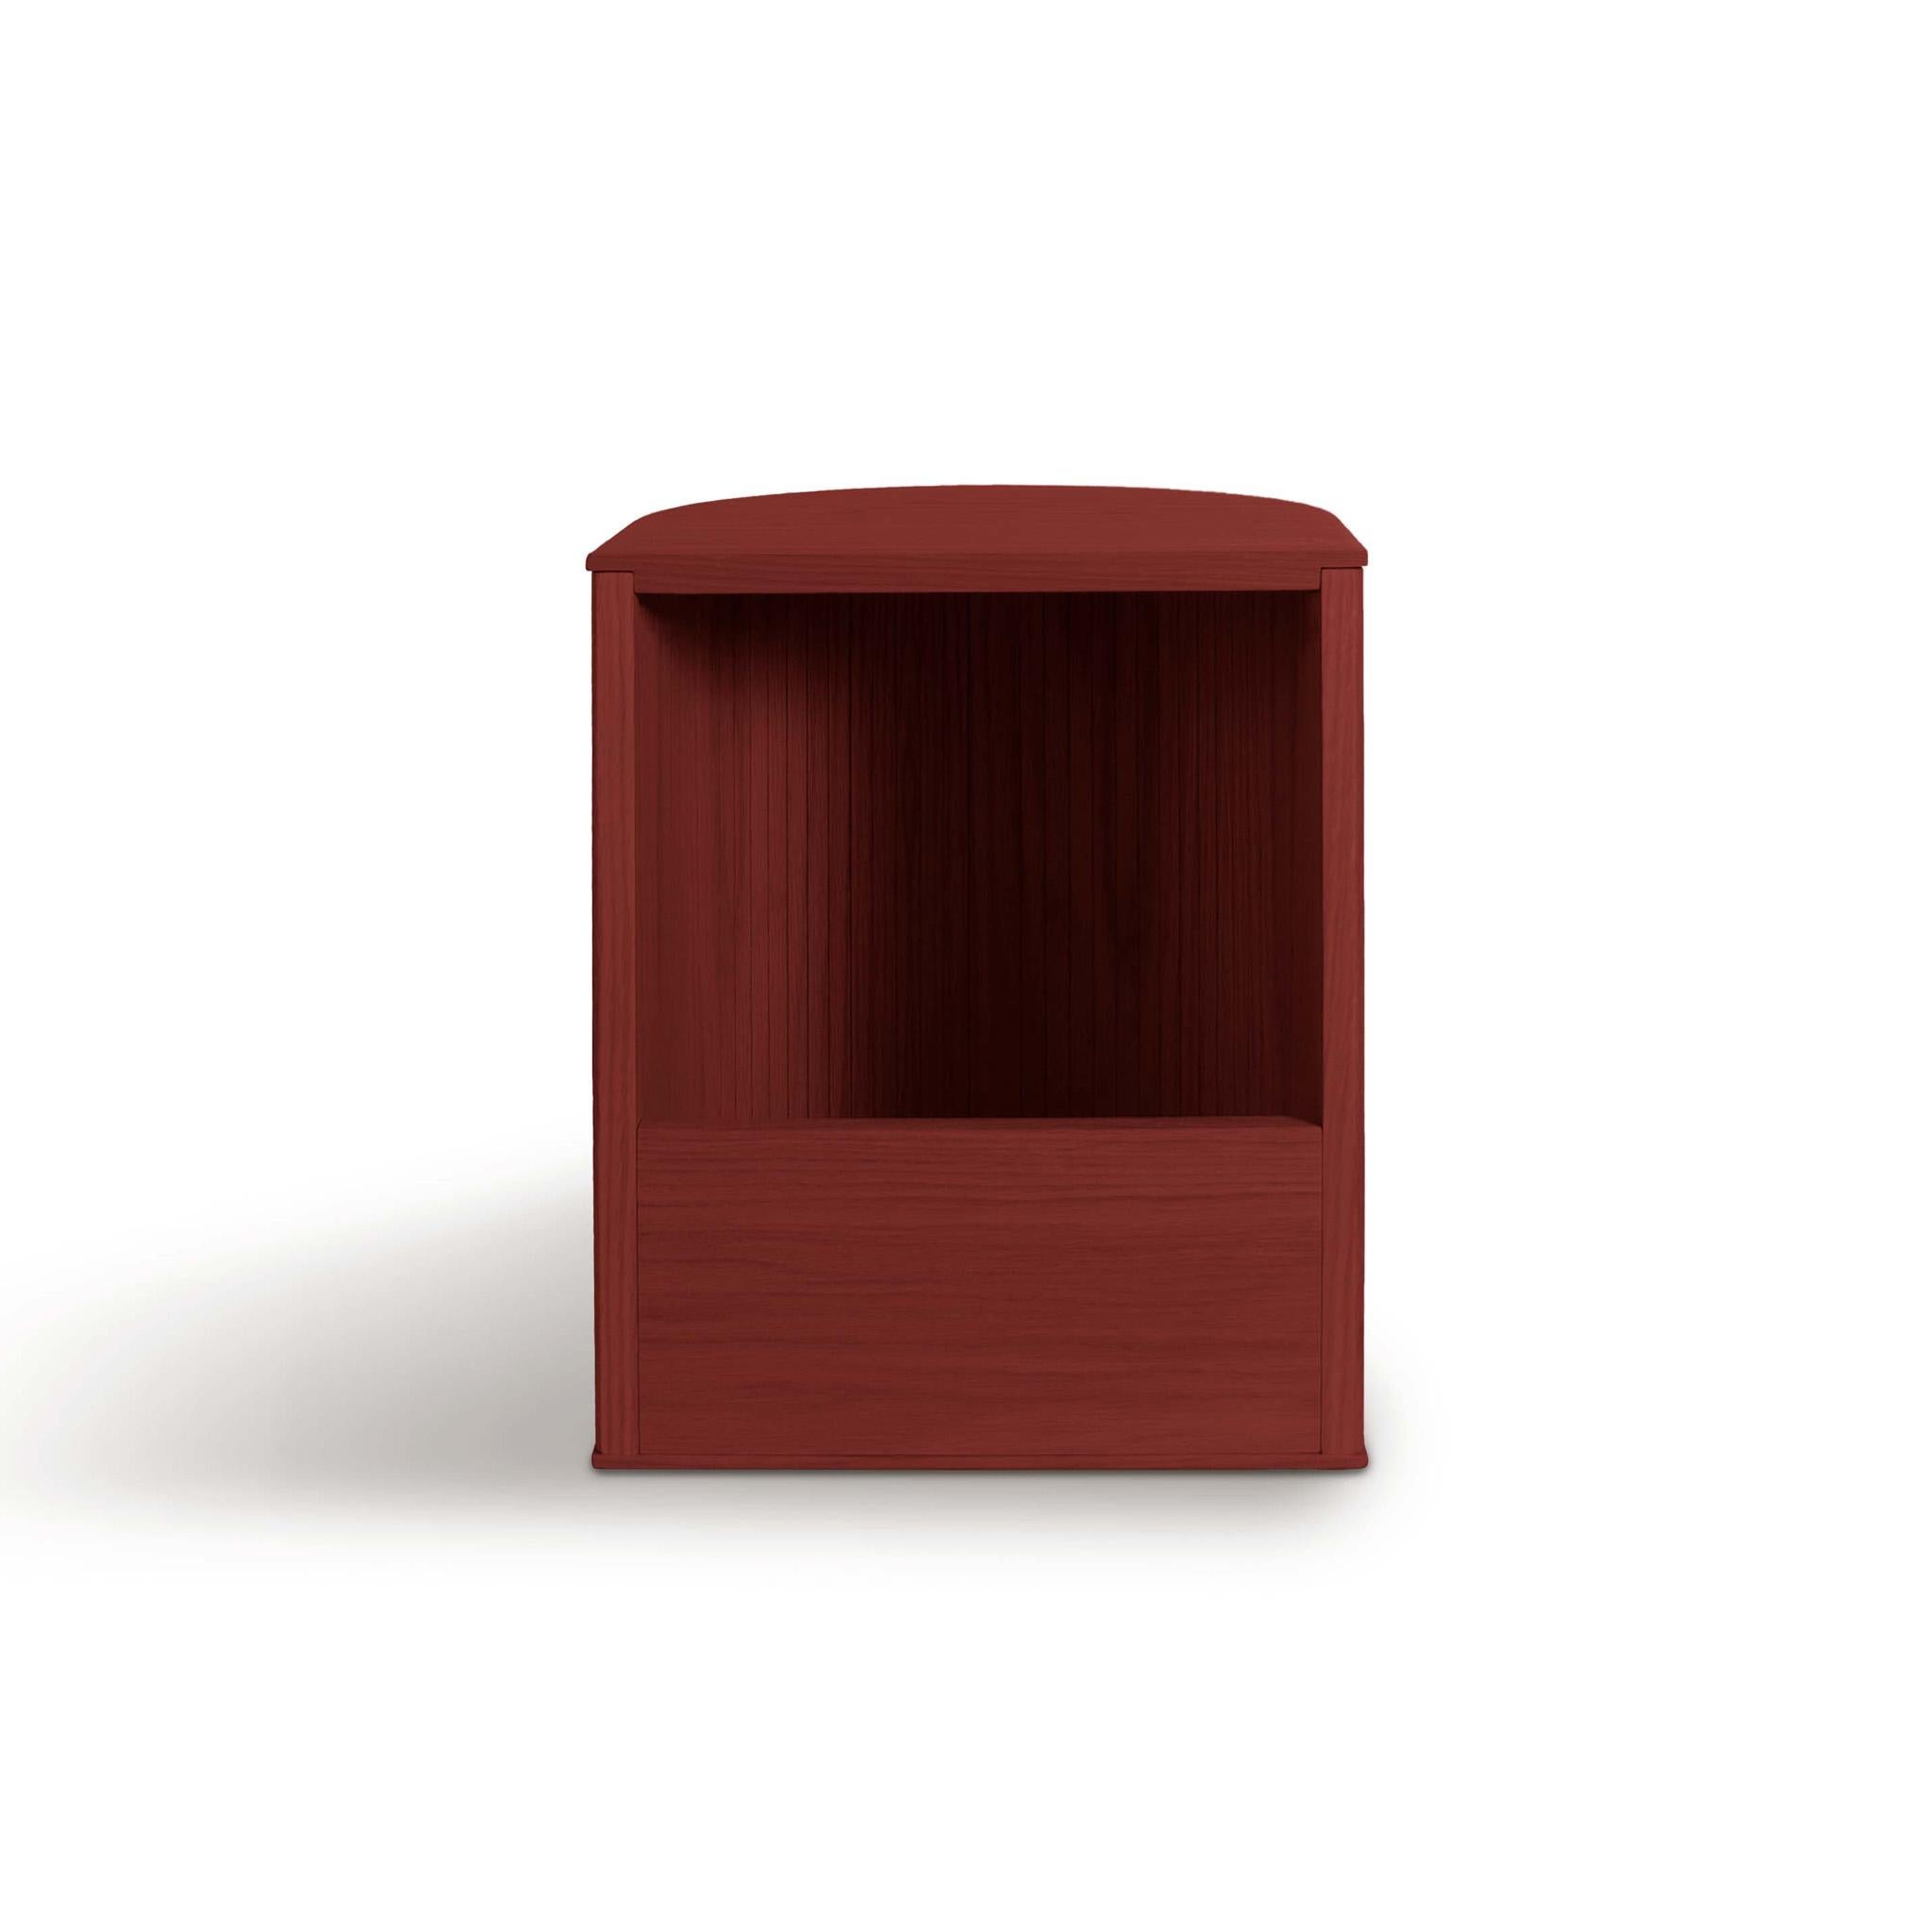 Spanish Duna shifting stool, Deep Red For Sale